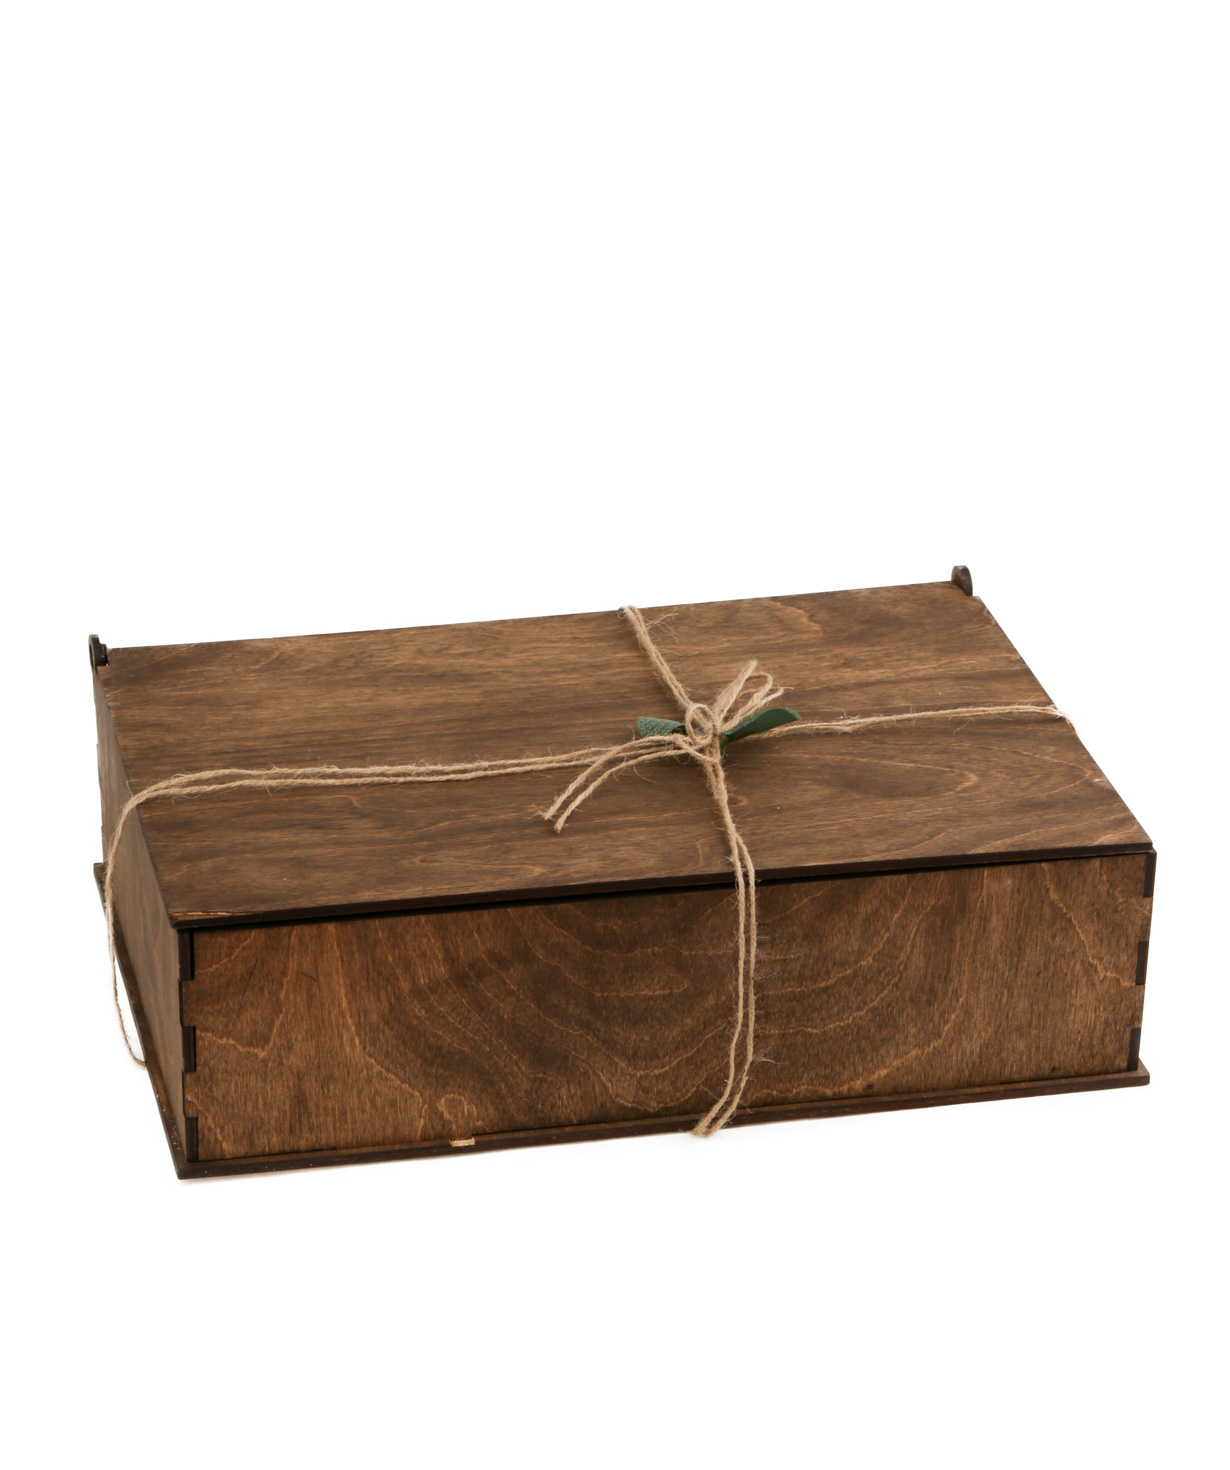 Gift box `THE BOX` for men №23